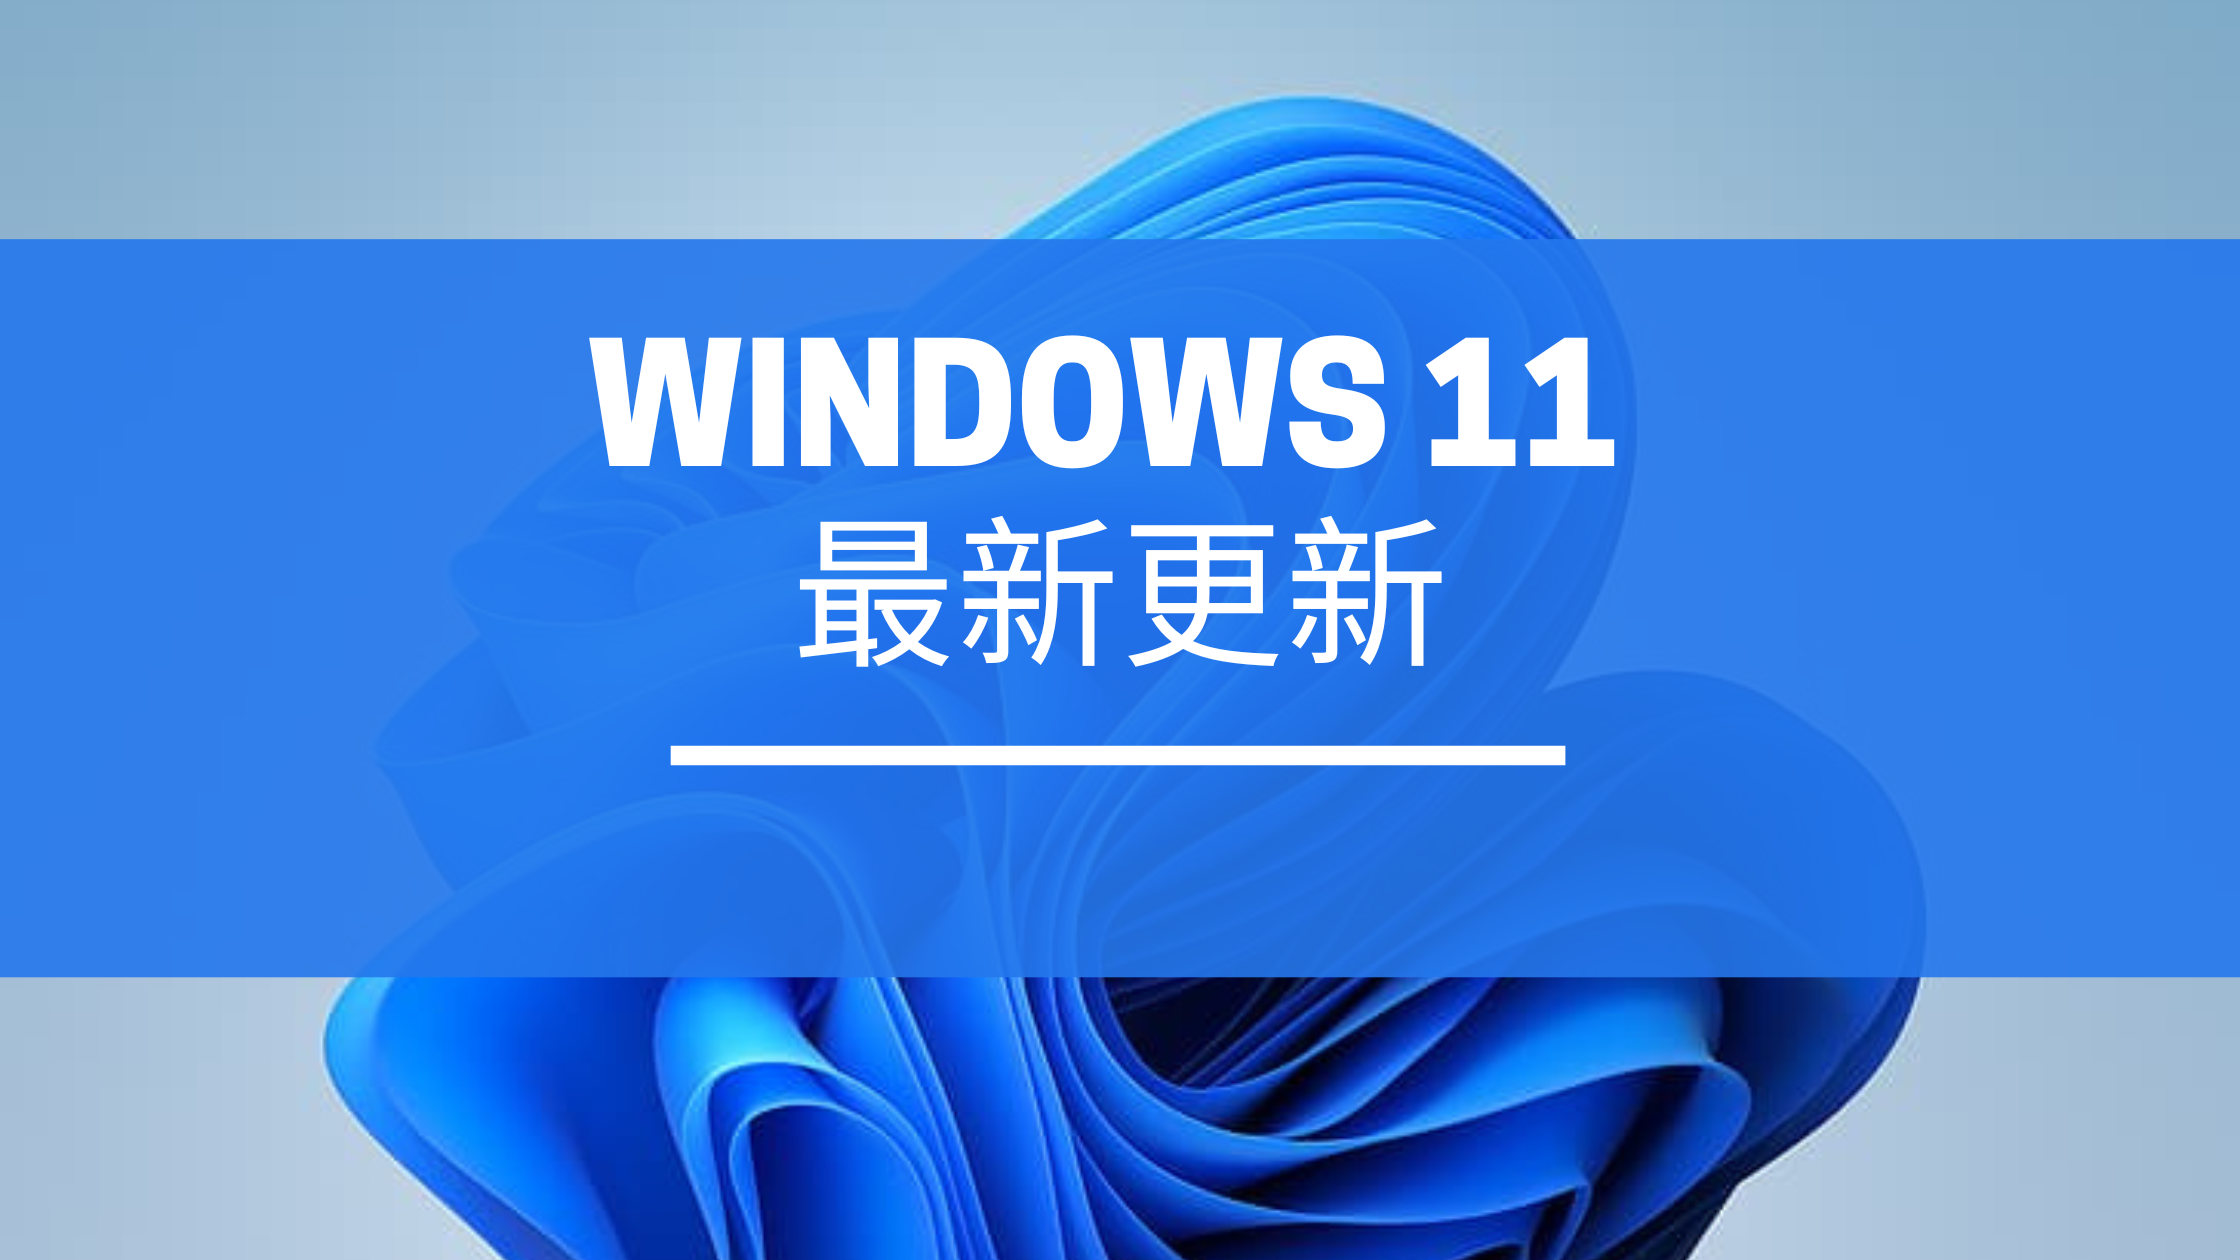 Microsoft WIndows 11 Updates